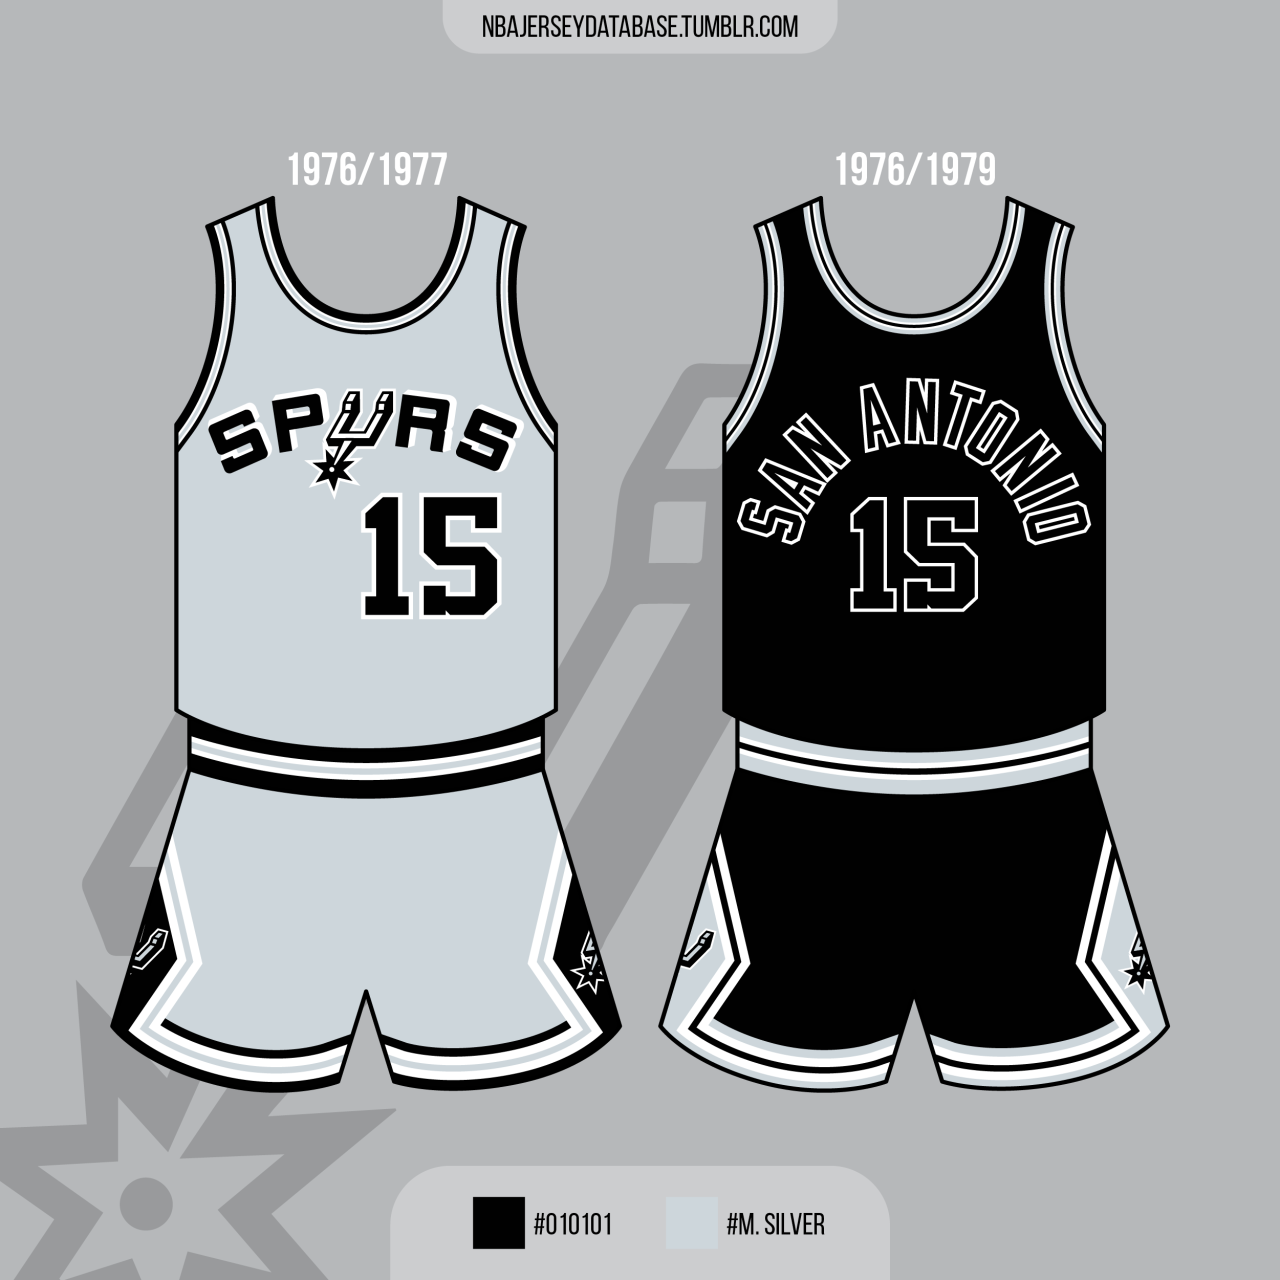 NBA Jersey Database, San Antonio Spurs 1976-1979 Record: 144-102 (59%)